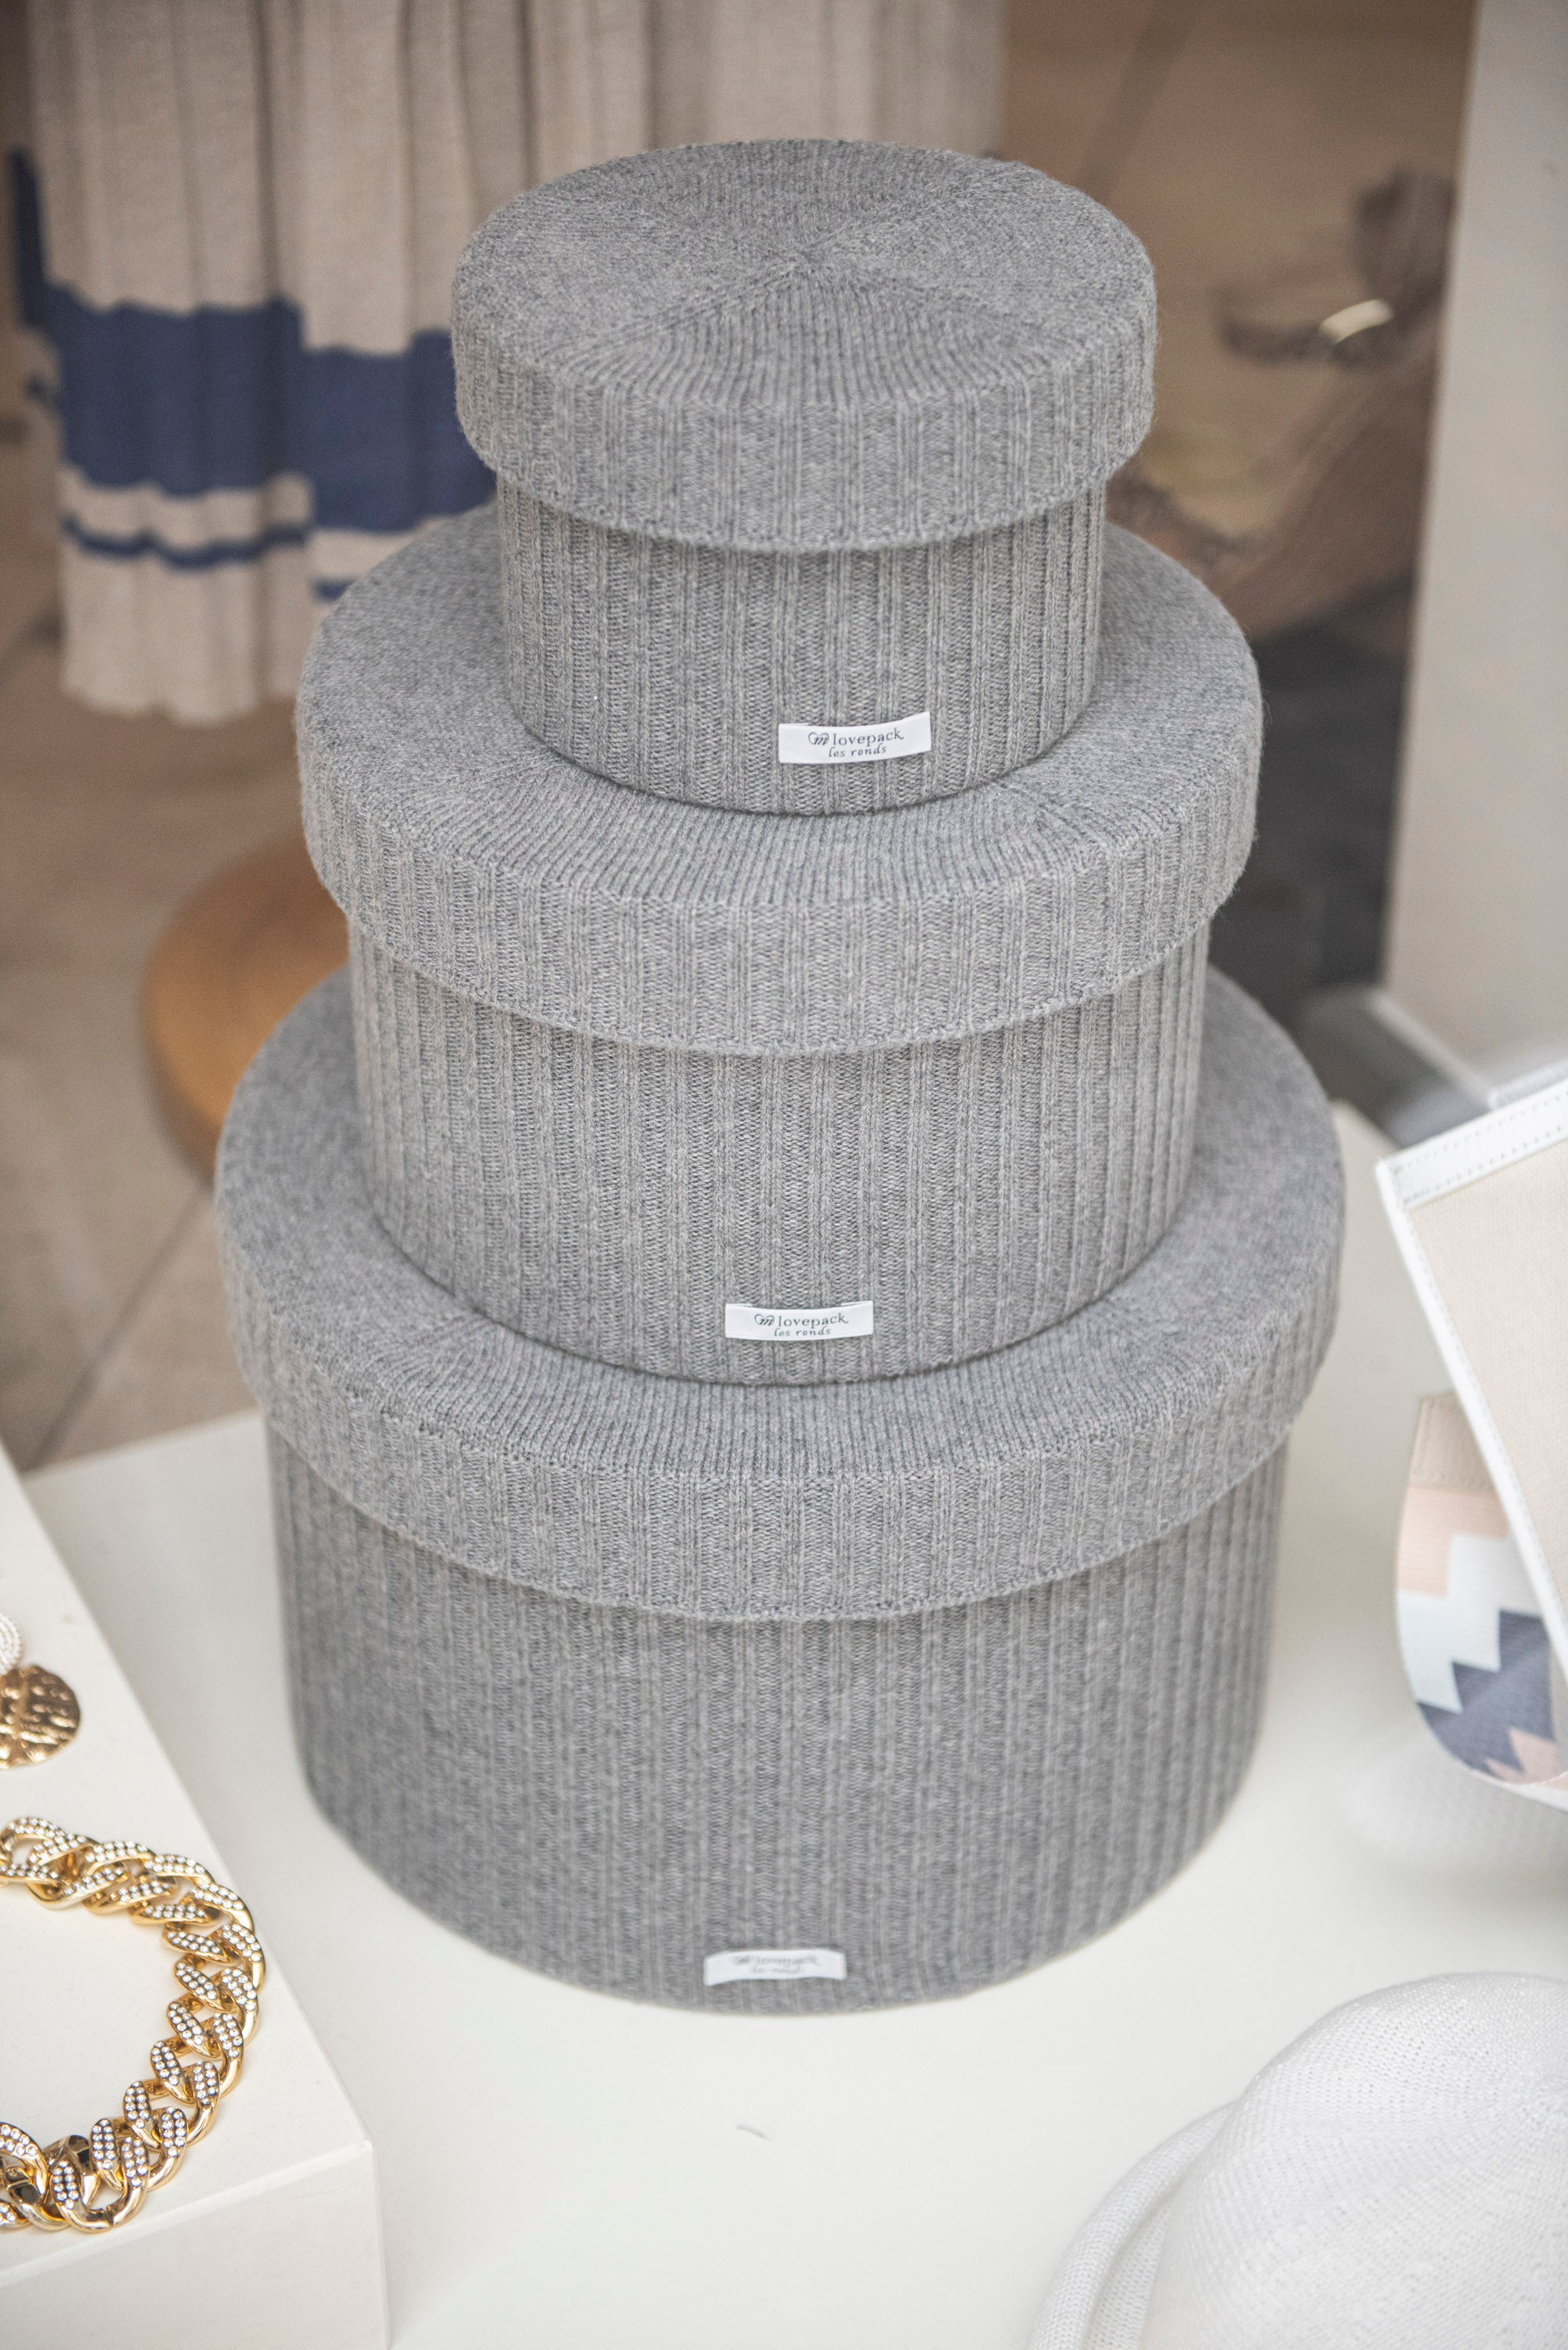 LES RONDS - Gray hatbox - medium size